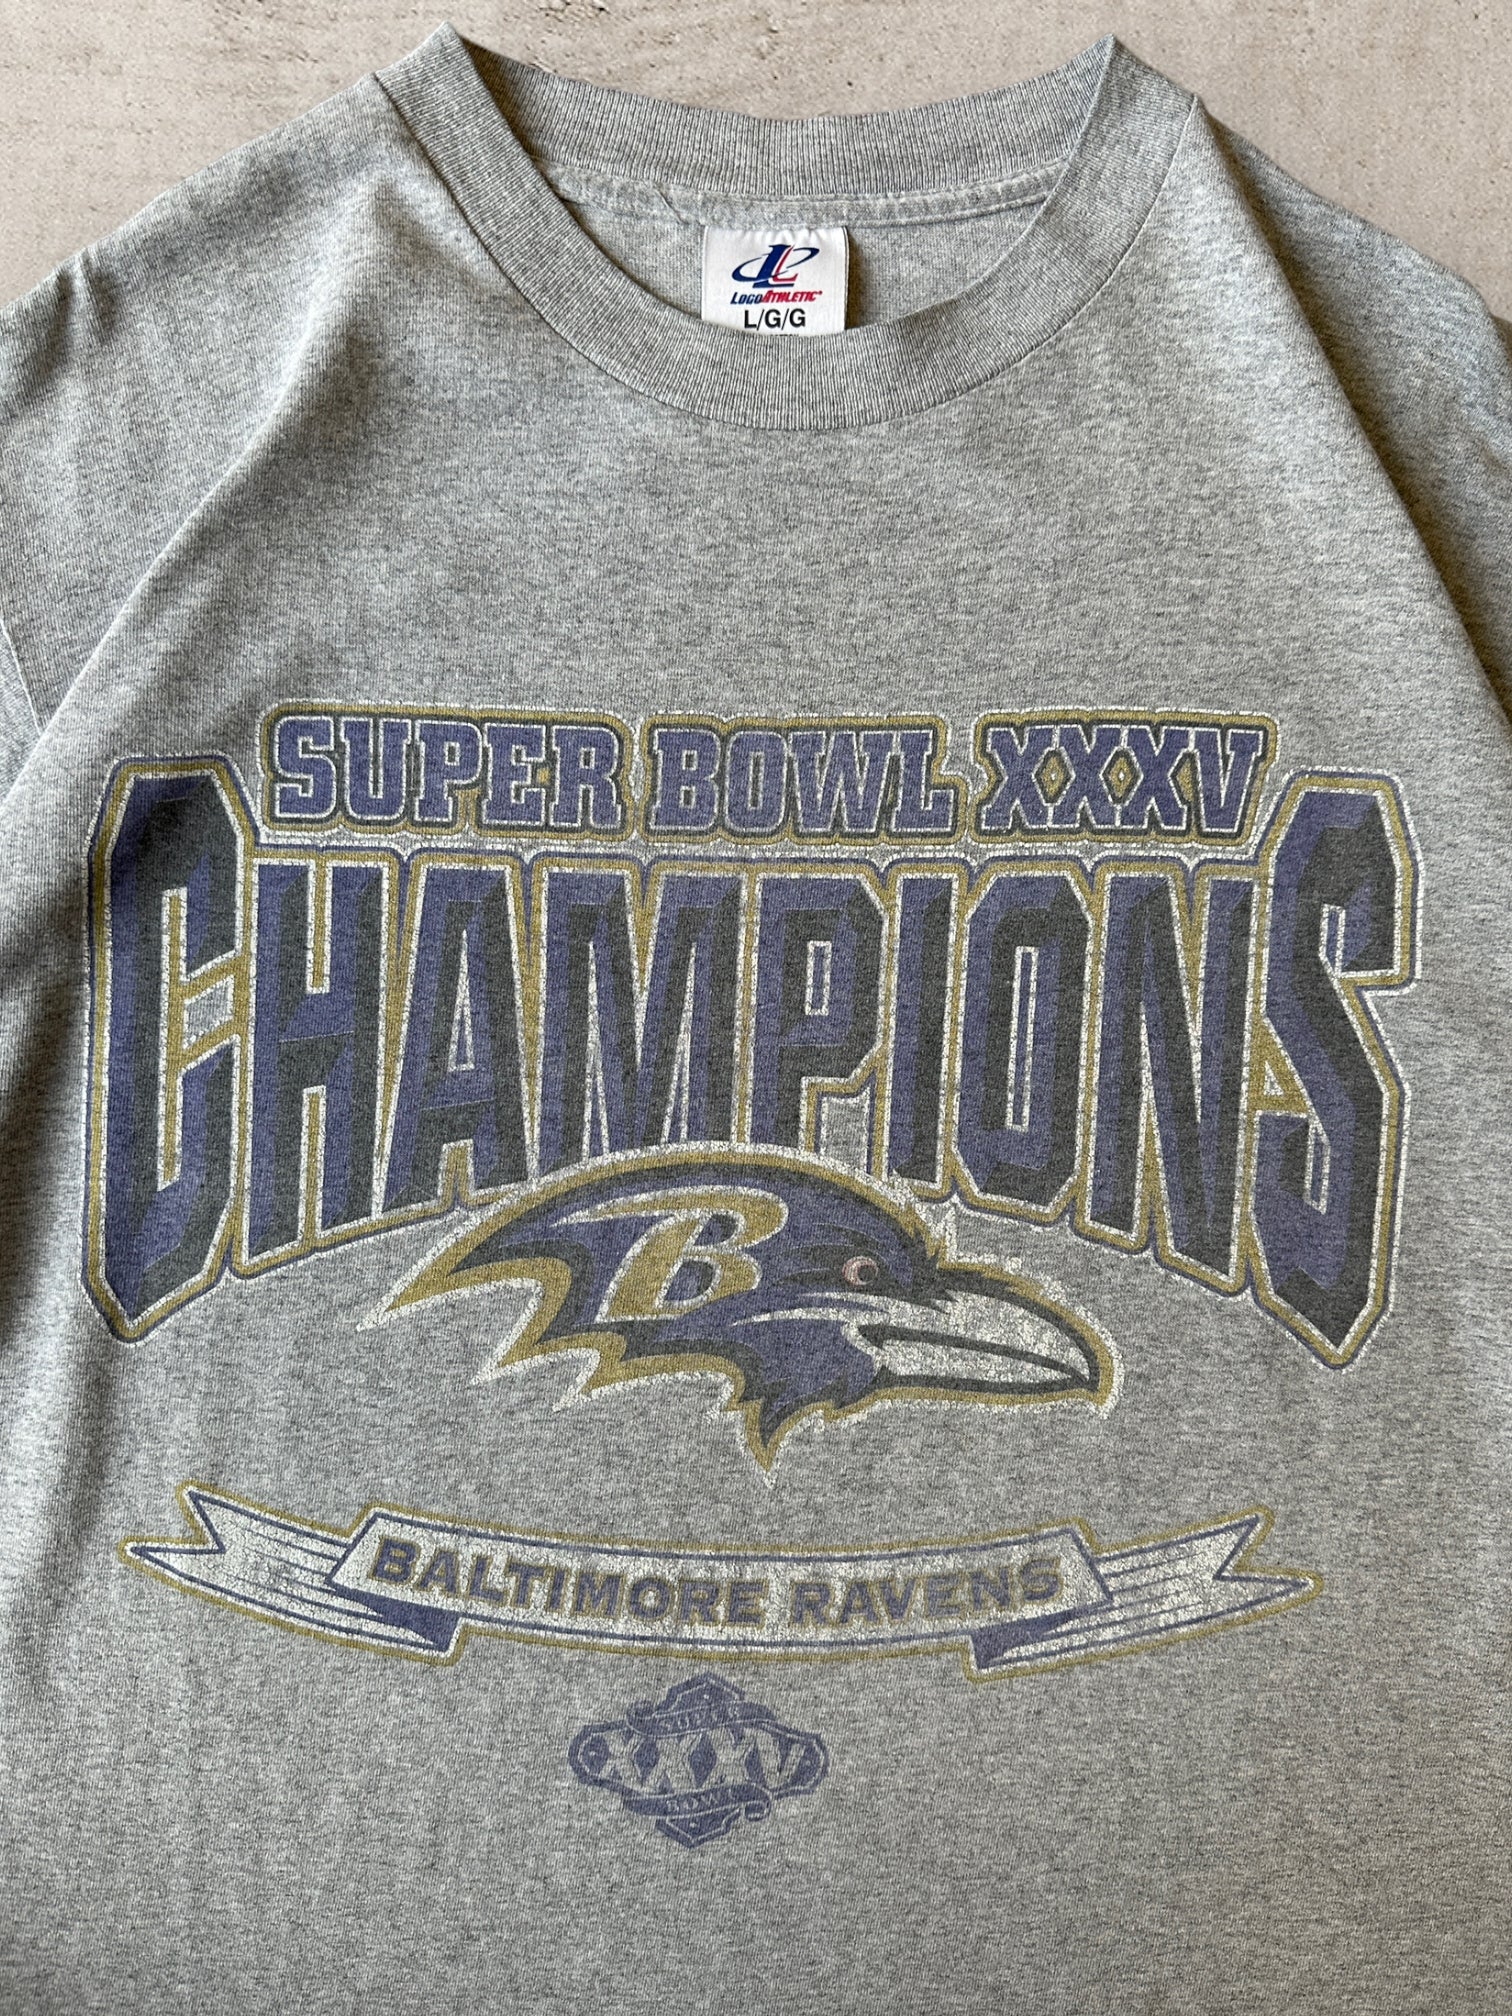 2001 Baltimore Ravens Super Bowl Champions T-Shirt - Large